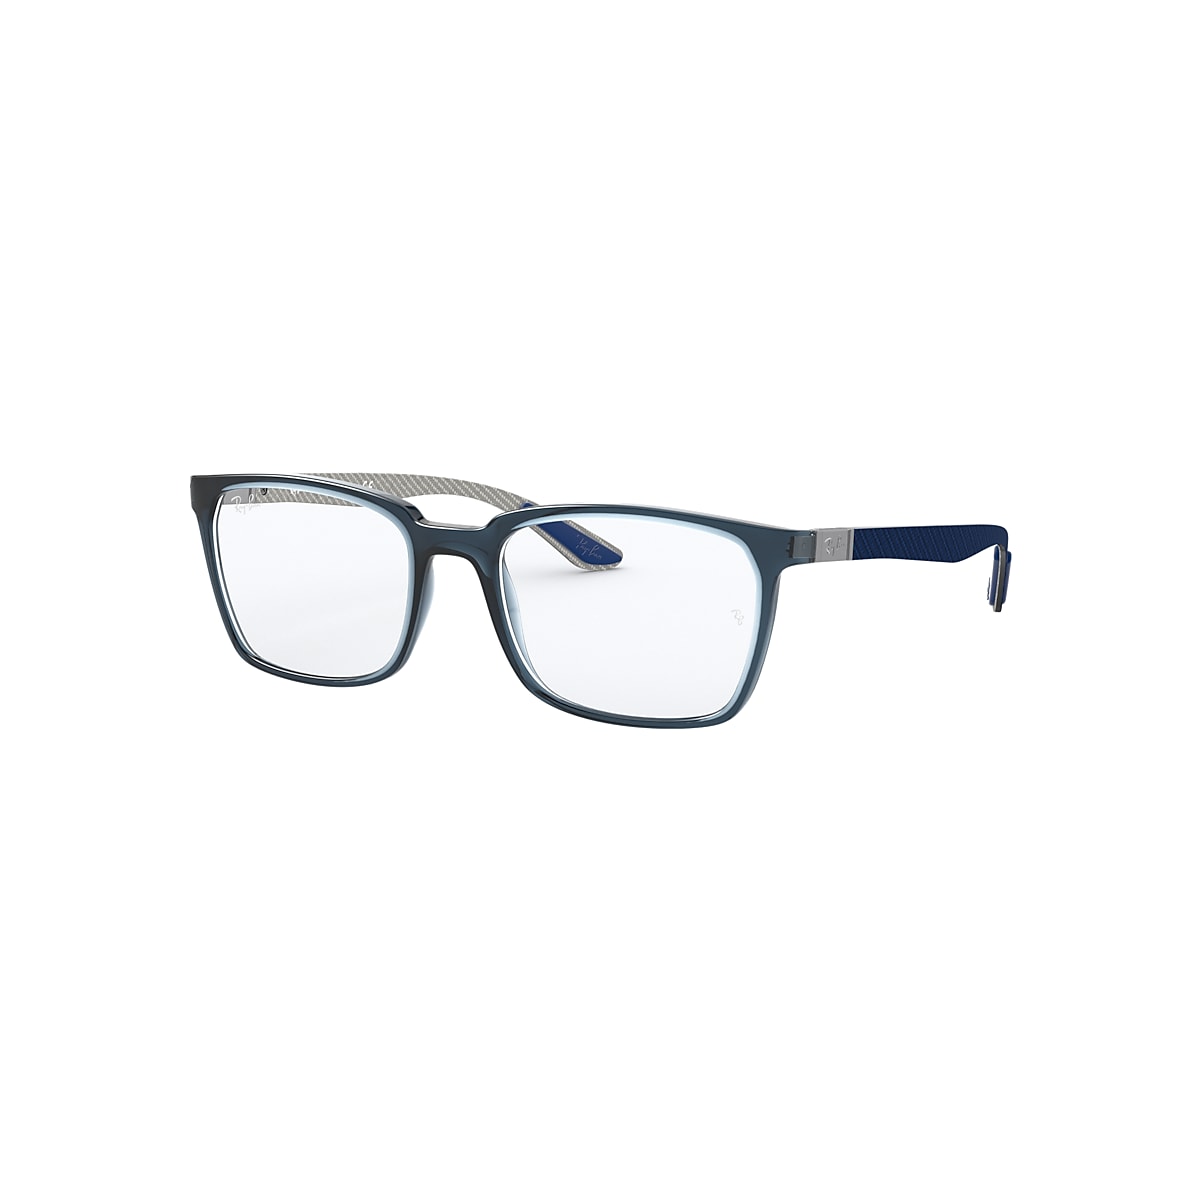 RB8906 OPTICS Brillen mit Blau transparent Rahmen - RB8906 | Ray